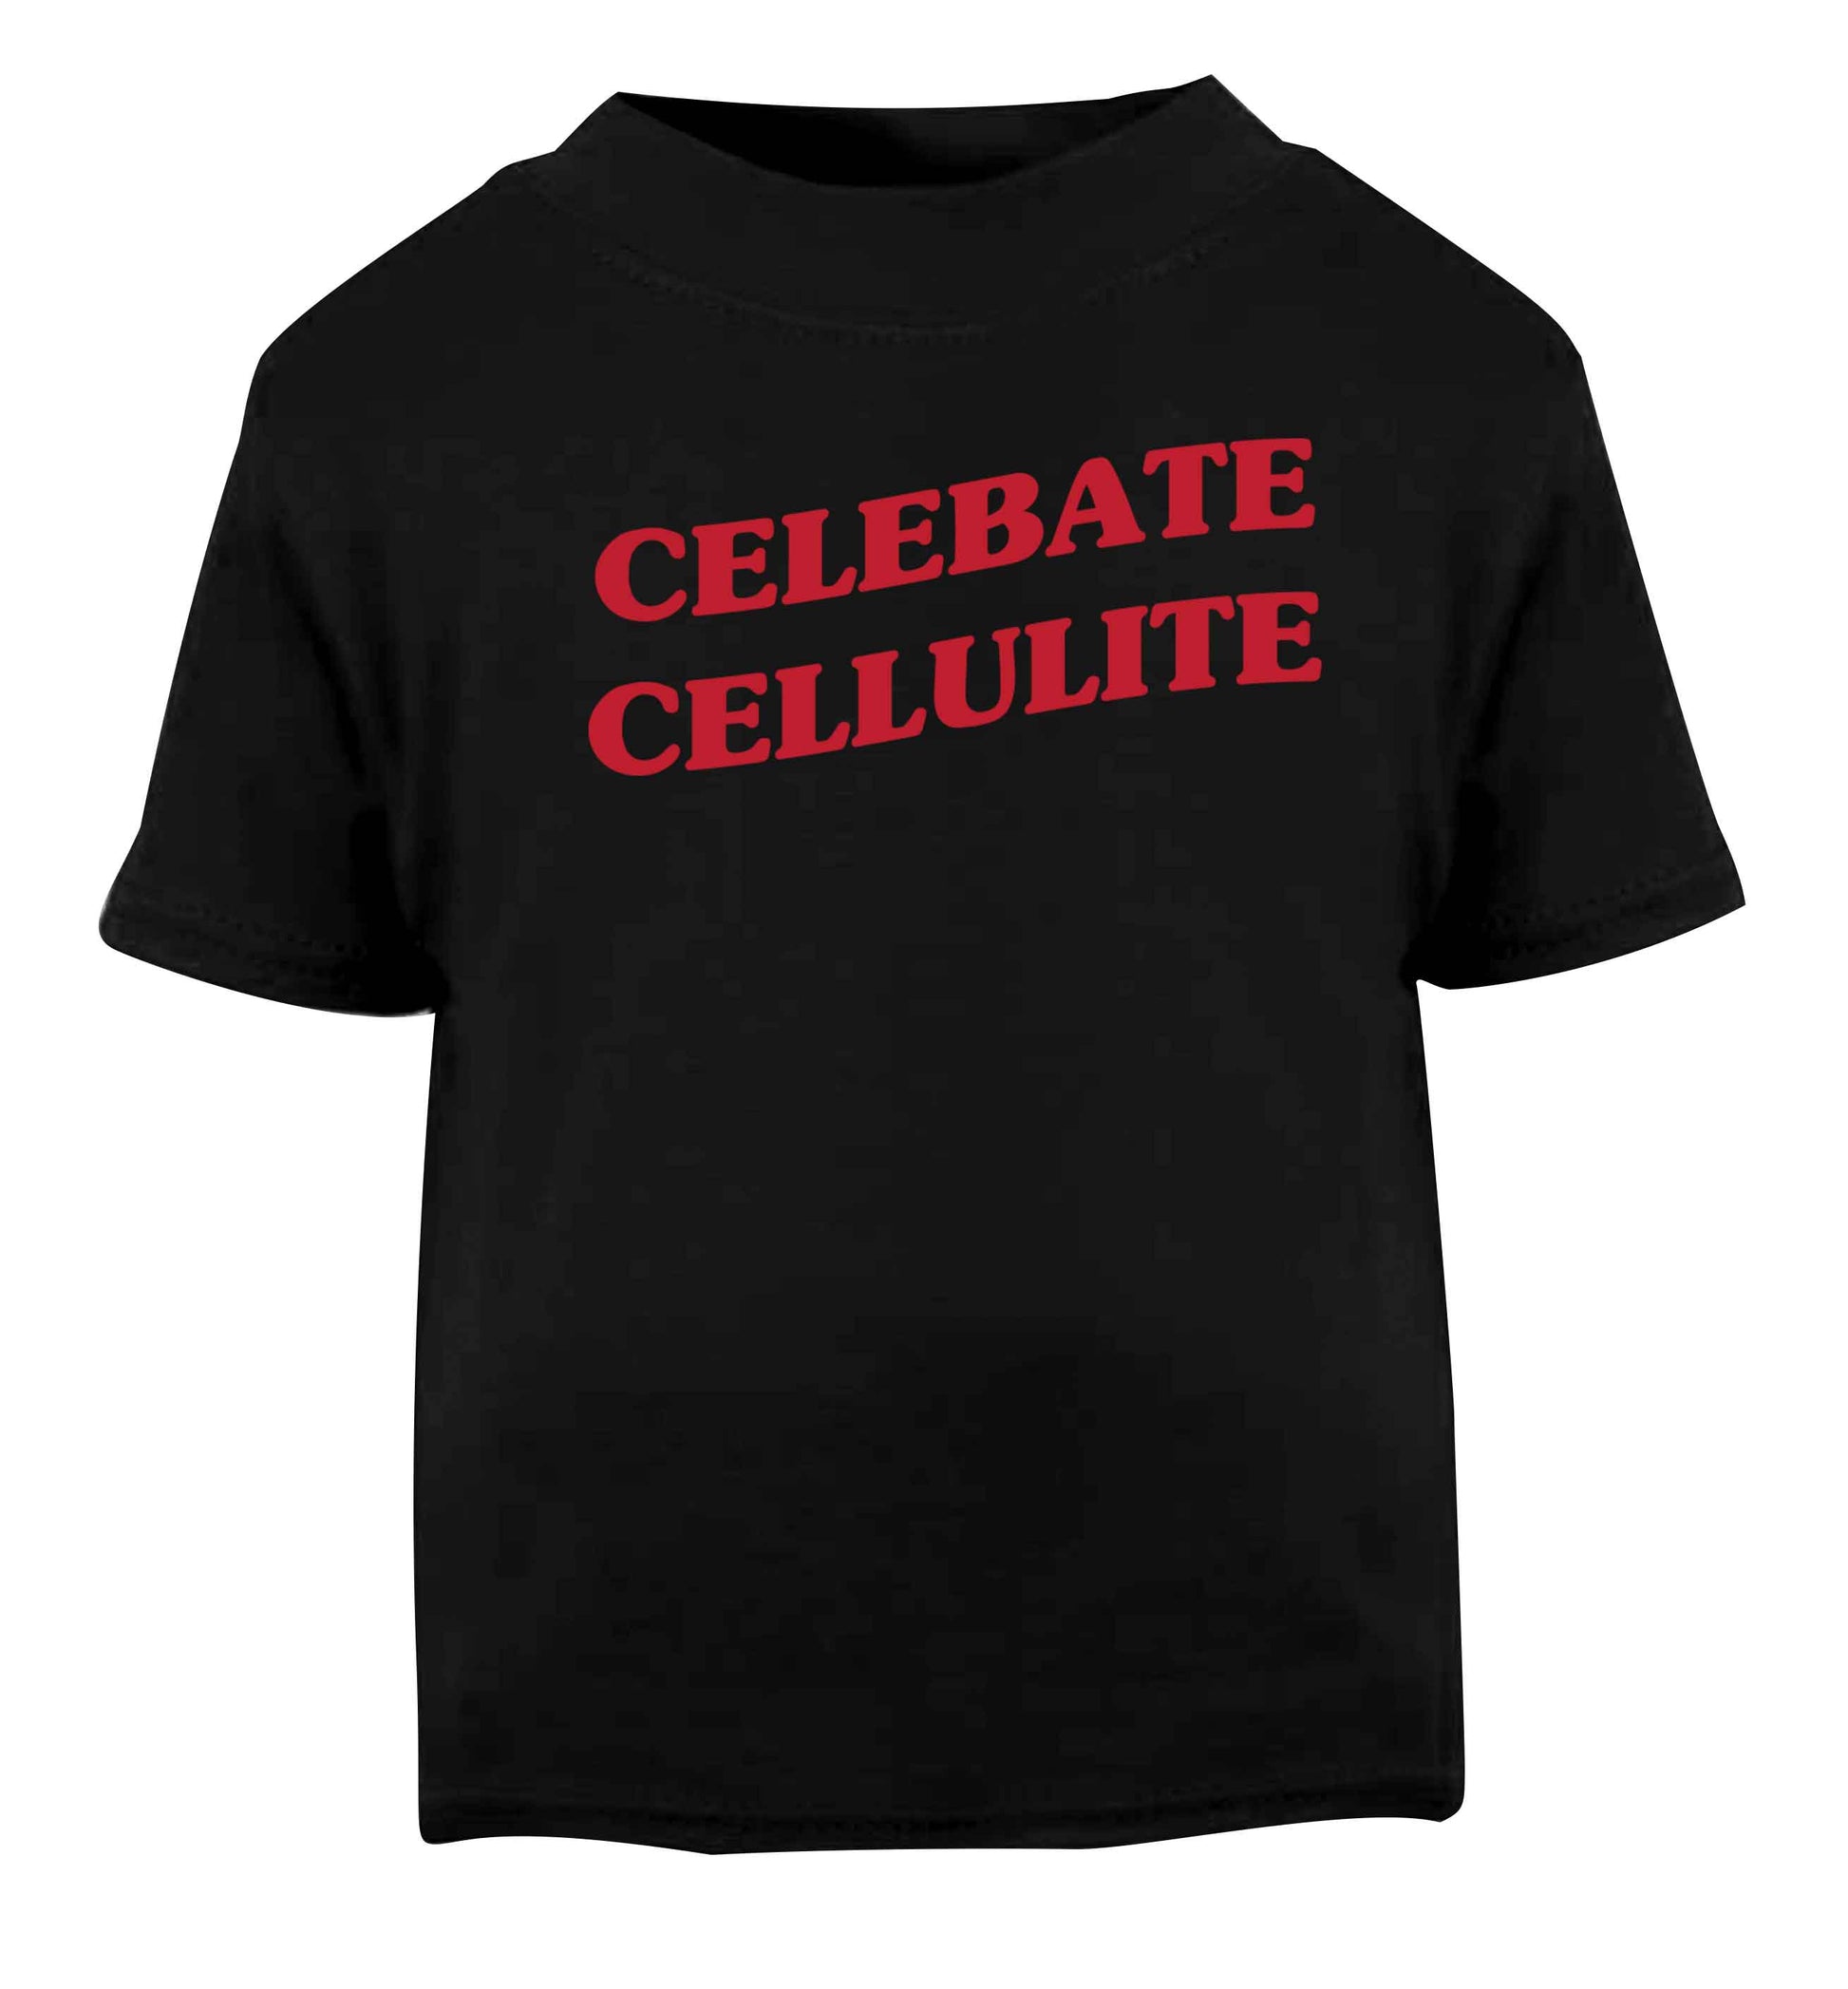 Celebrate cellulite Black baby toddler Tshirt 2 years